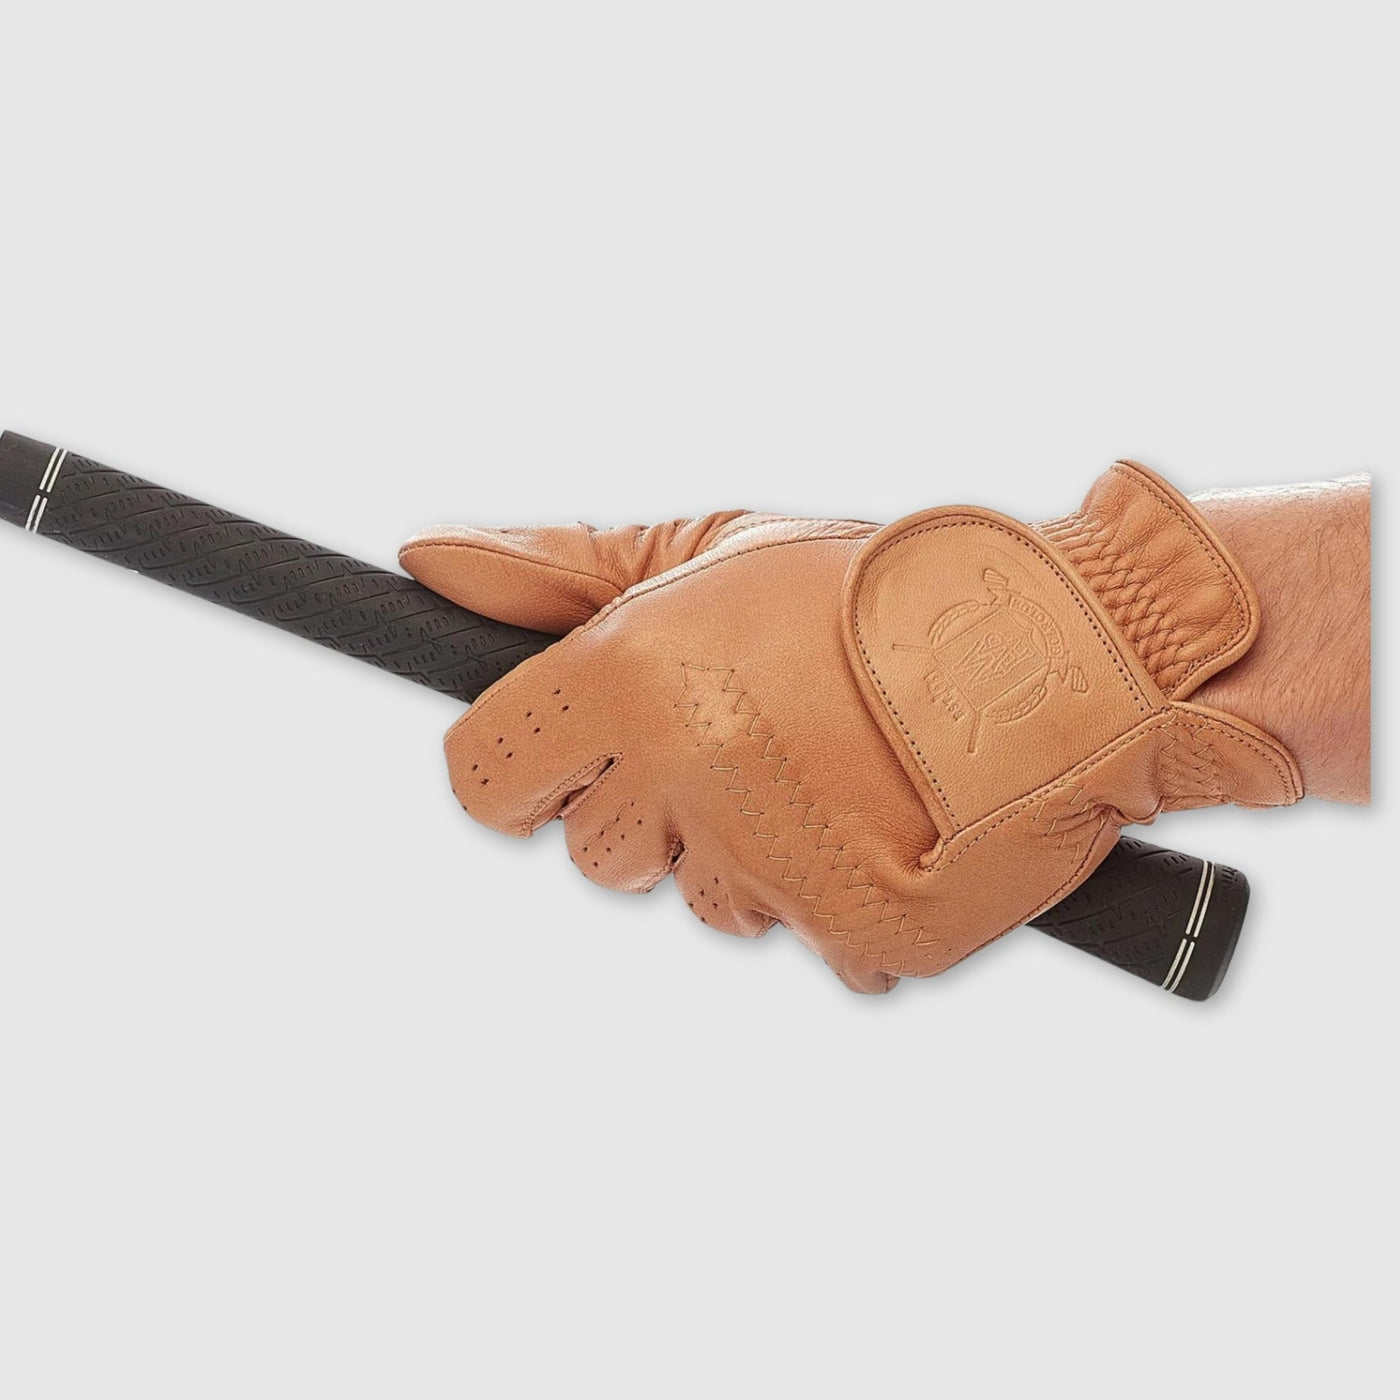 PRO Cabretta Leather Golf Glove - Vintage Tan - MODEST VINTAGE PLAYER LTD